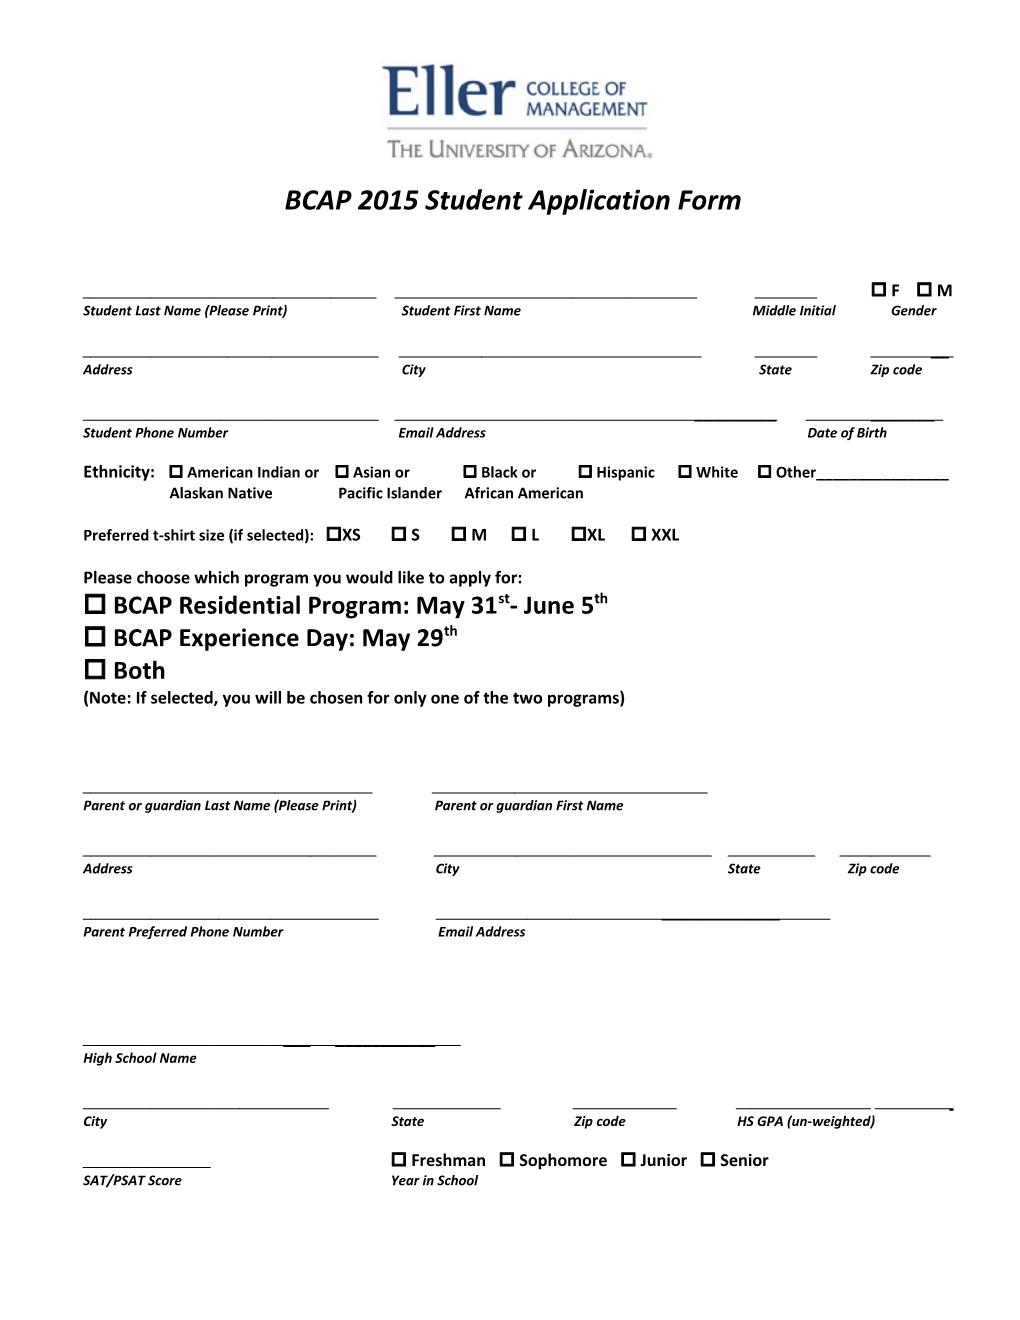 BCAP 2015 Student Application Form